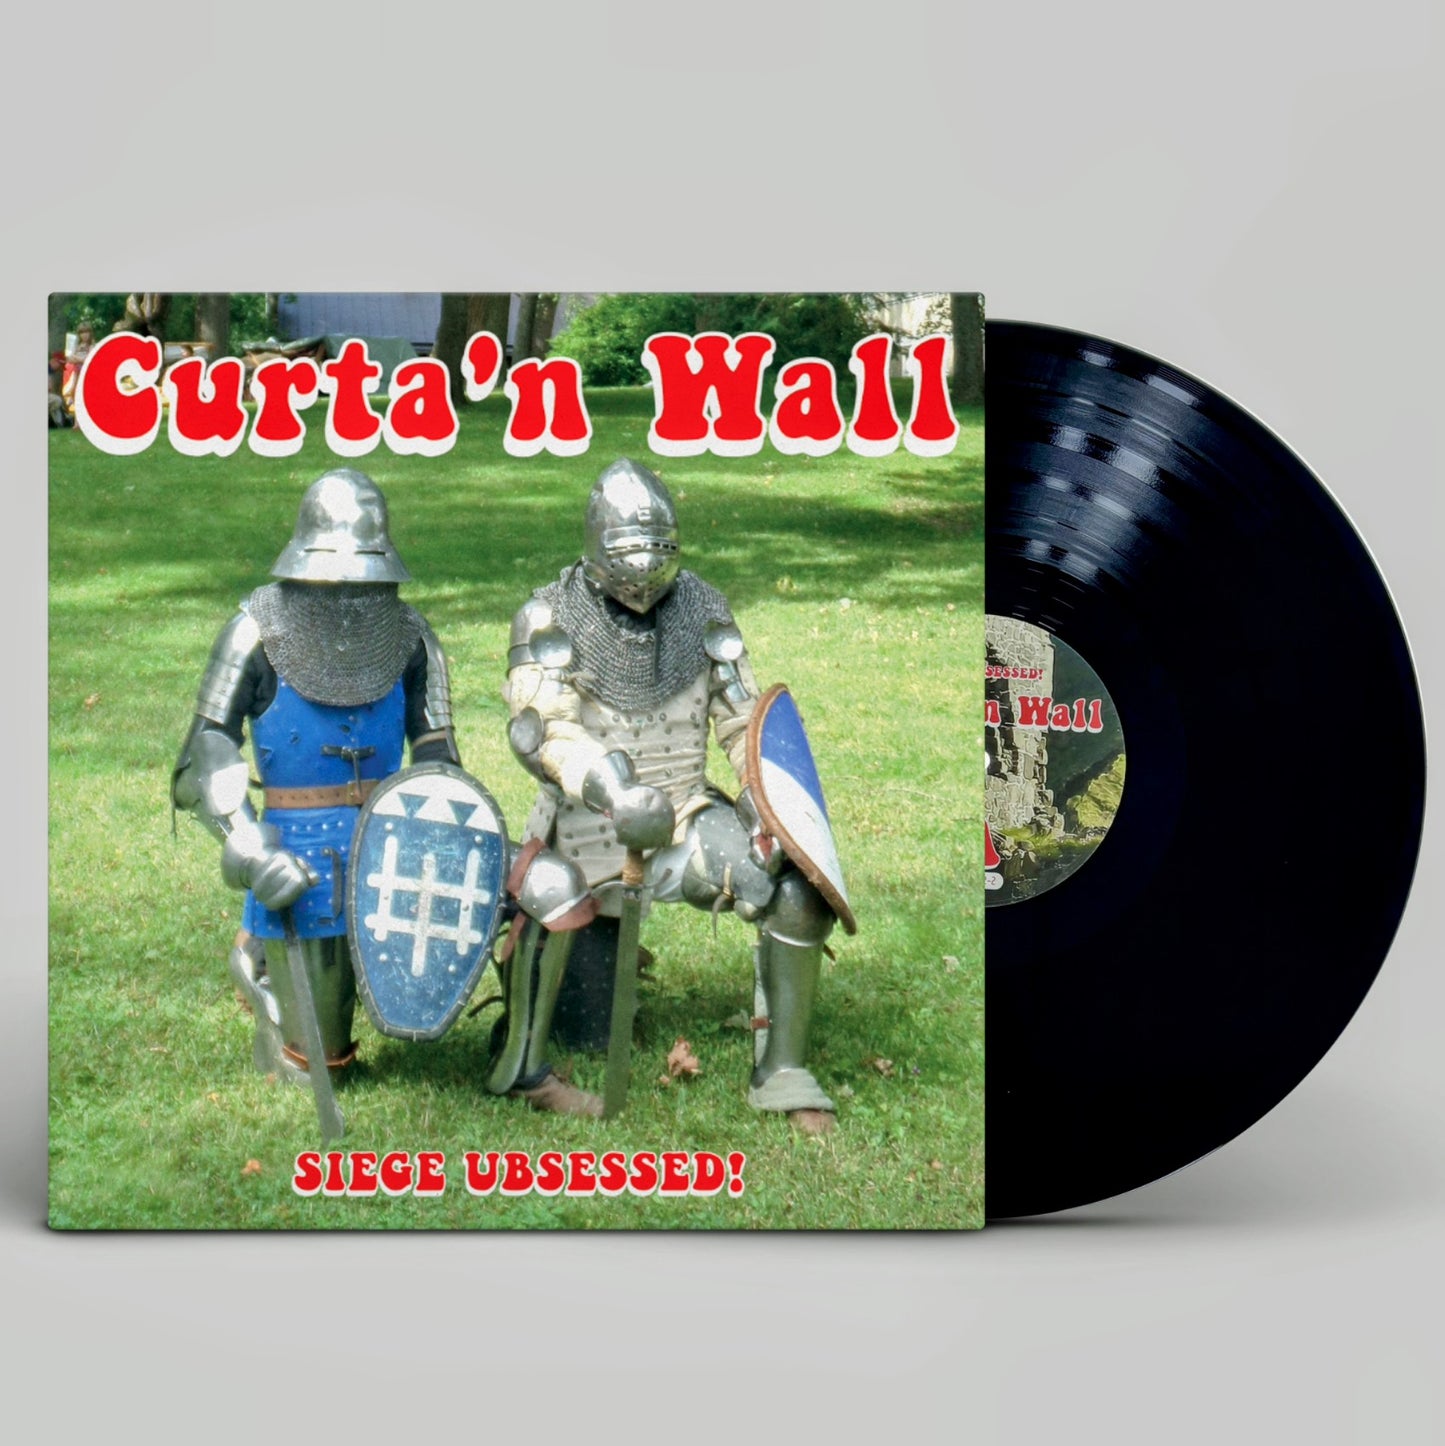 CURTA'N WALL "Siege Ubsessed" vinyl LP (3 color options, 180g)